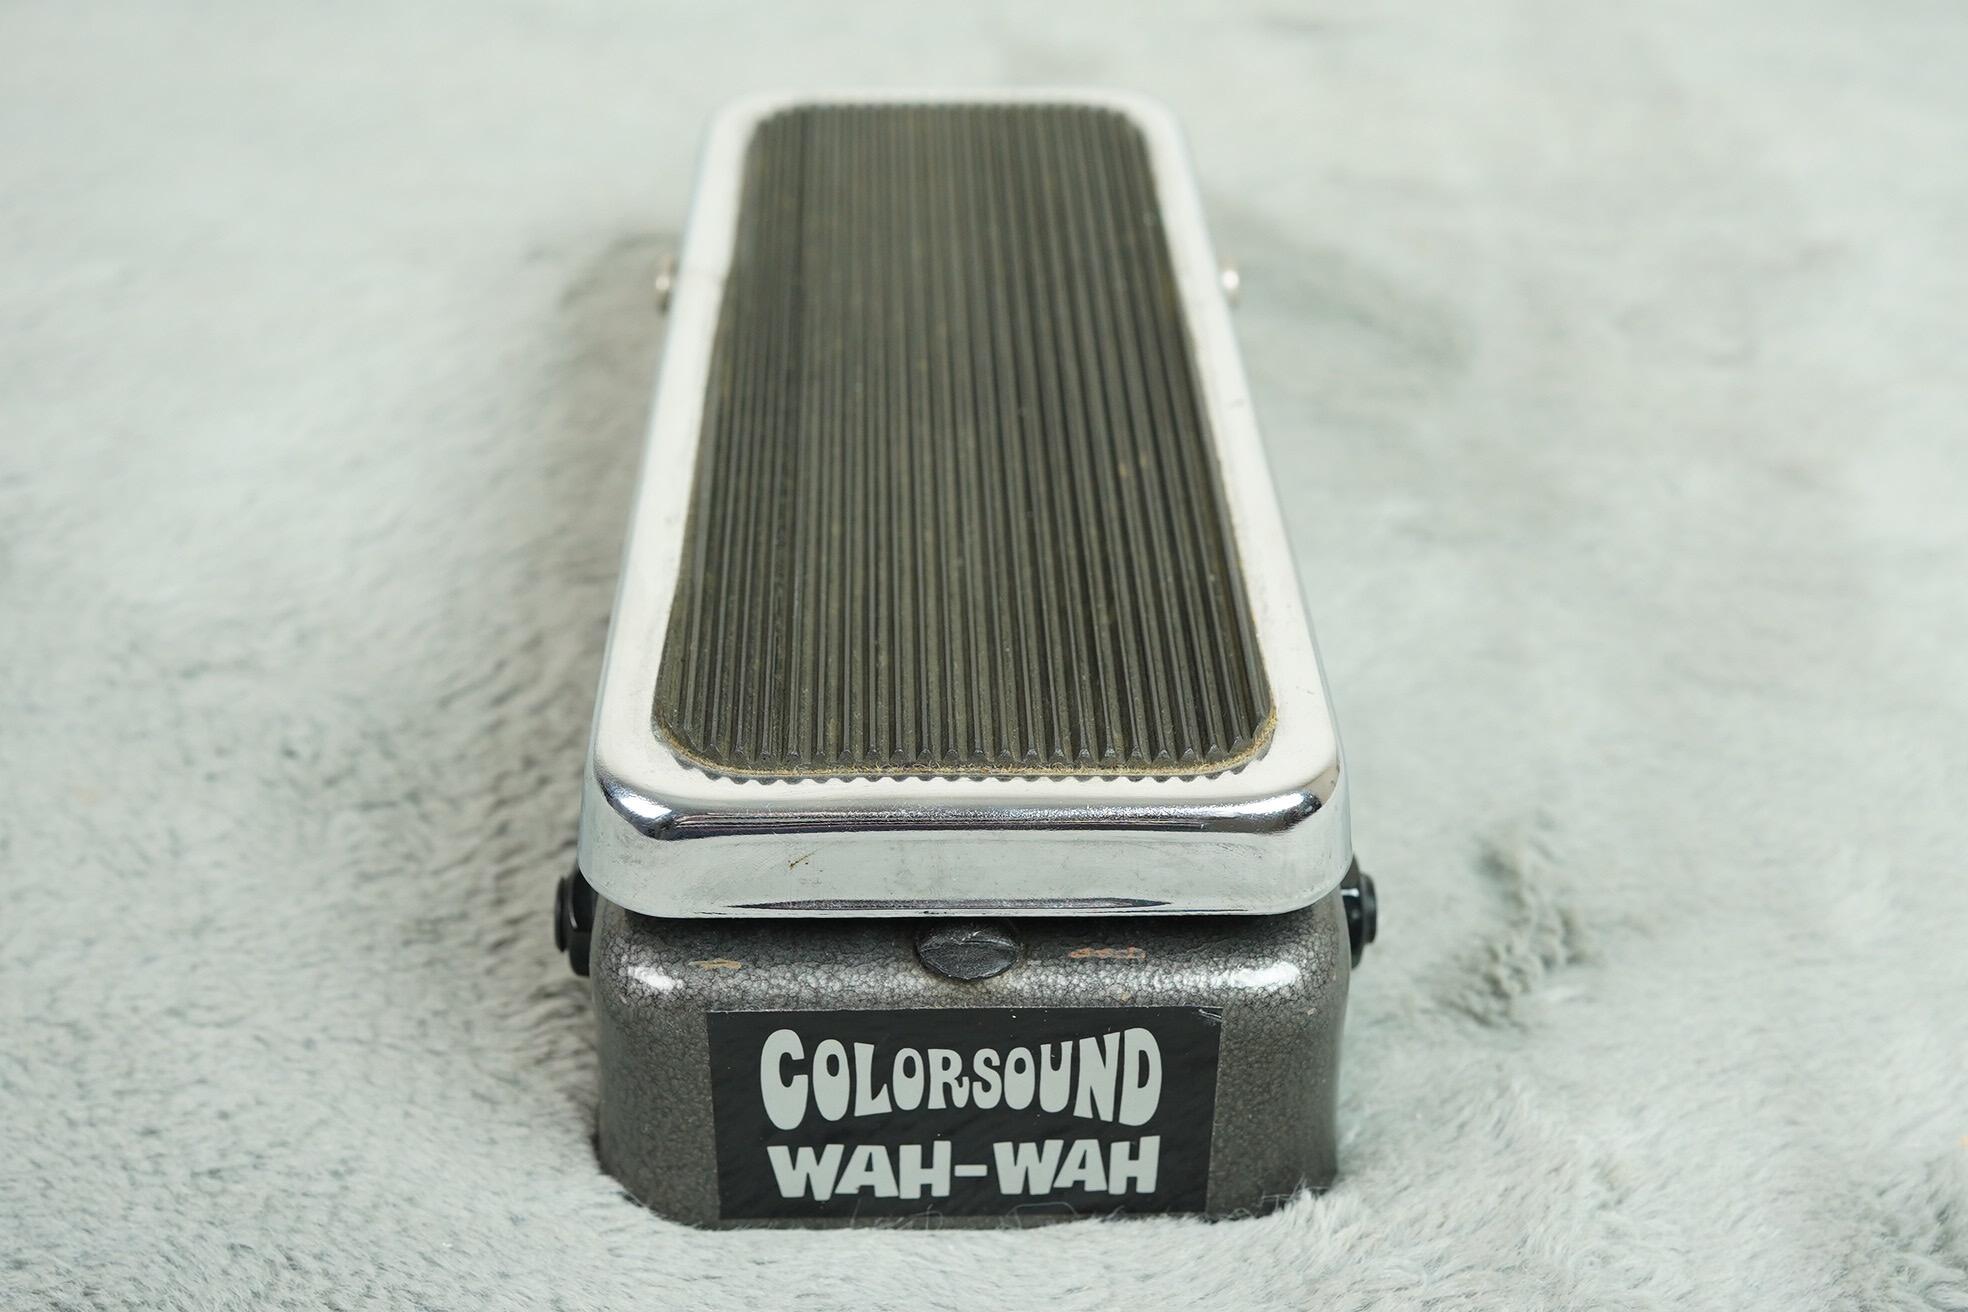 1973 Colorsound Wah-Wah Pedal